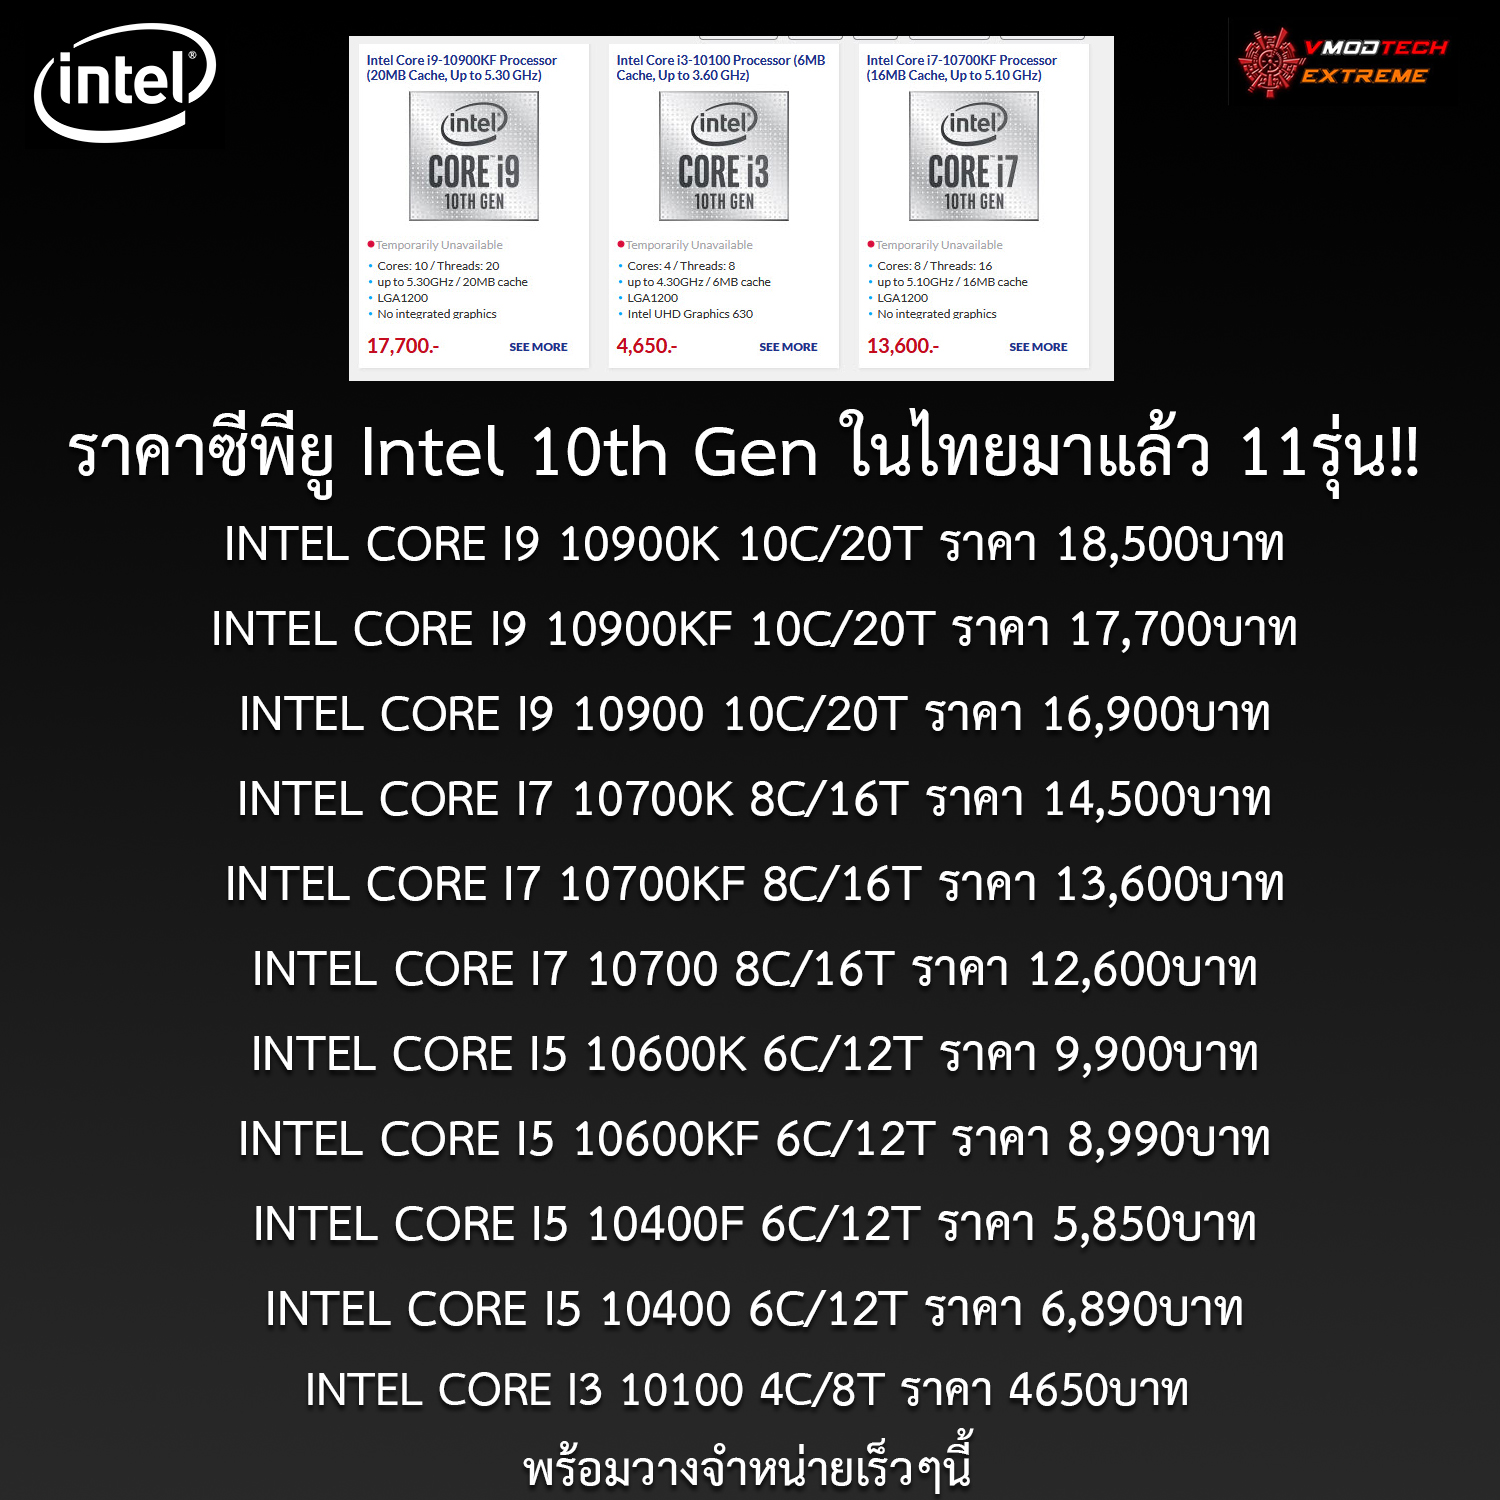 intel 10th gen price list thai by invadeit ราคาไทยมาอีกแล้ว!! ซีพียู Intel 10th Gen ทั้ง 11รุ่นตั้งแต่ Core i9 , Core i7 , Core i5 และ Core i3 ทั้งรหัส K , KF , F และ Non K พร้อมวางจำหน่ายเร็วๆนี้ 